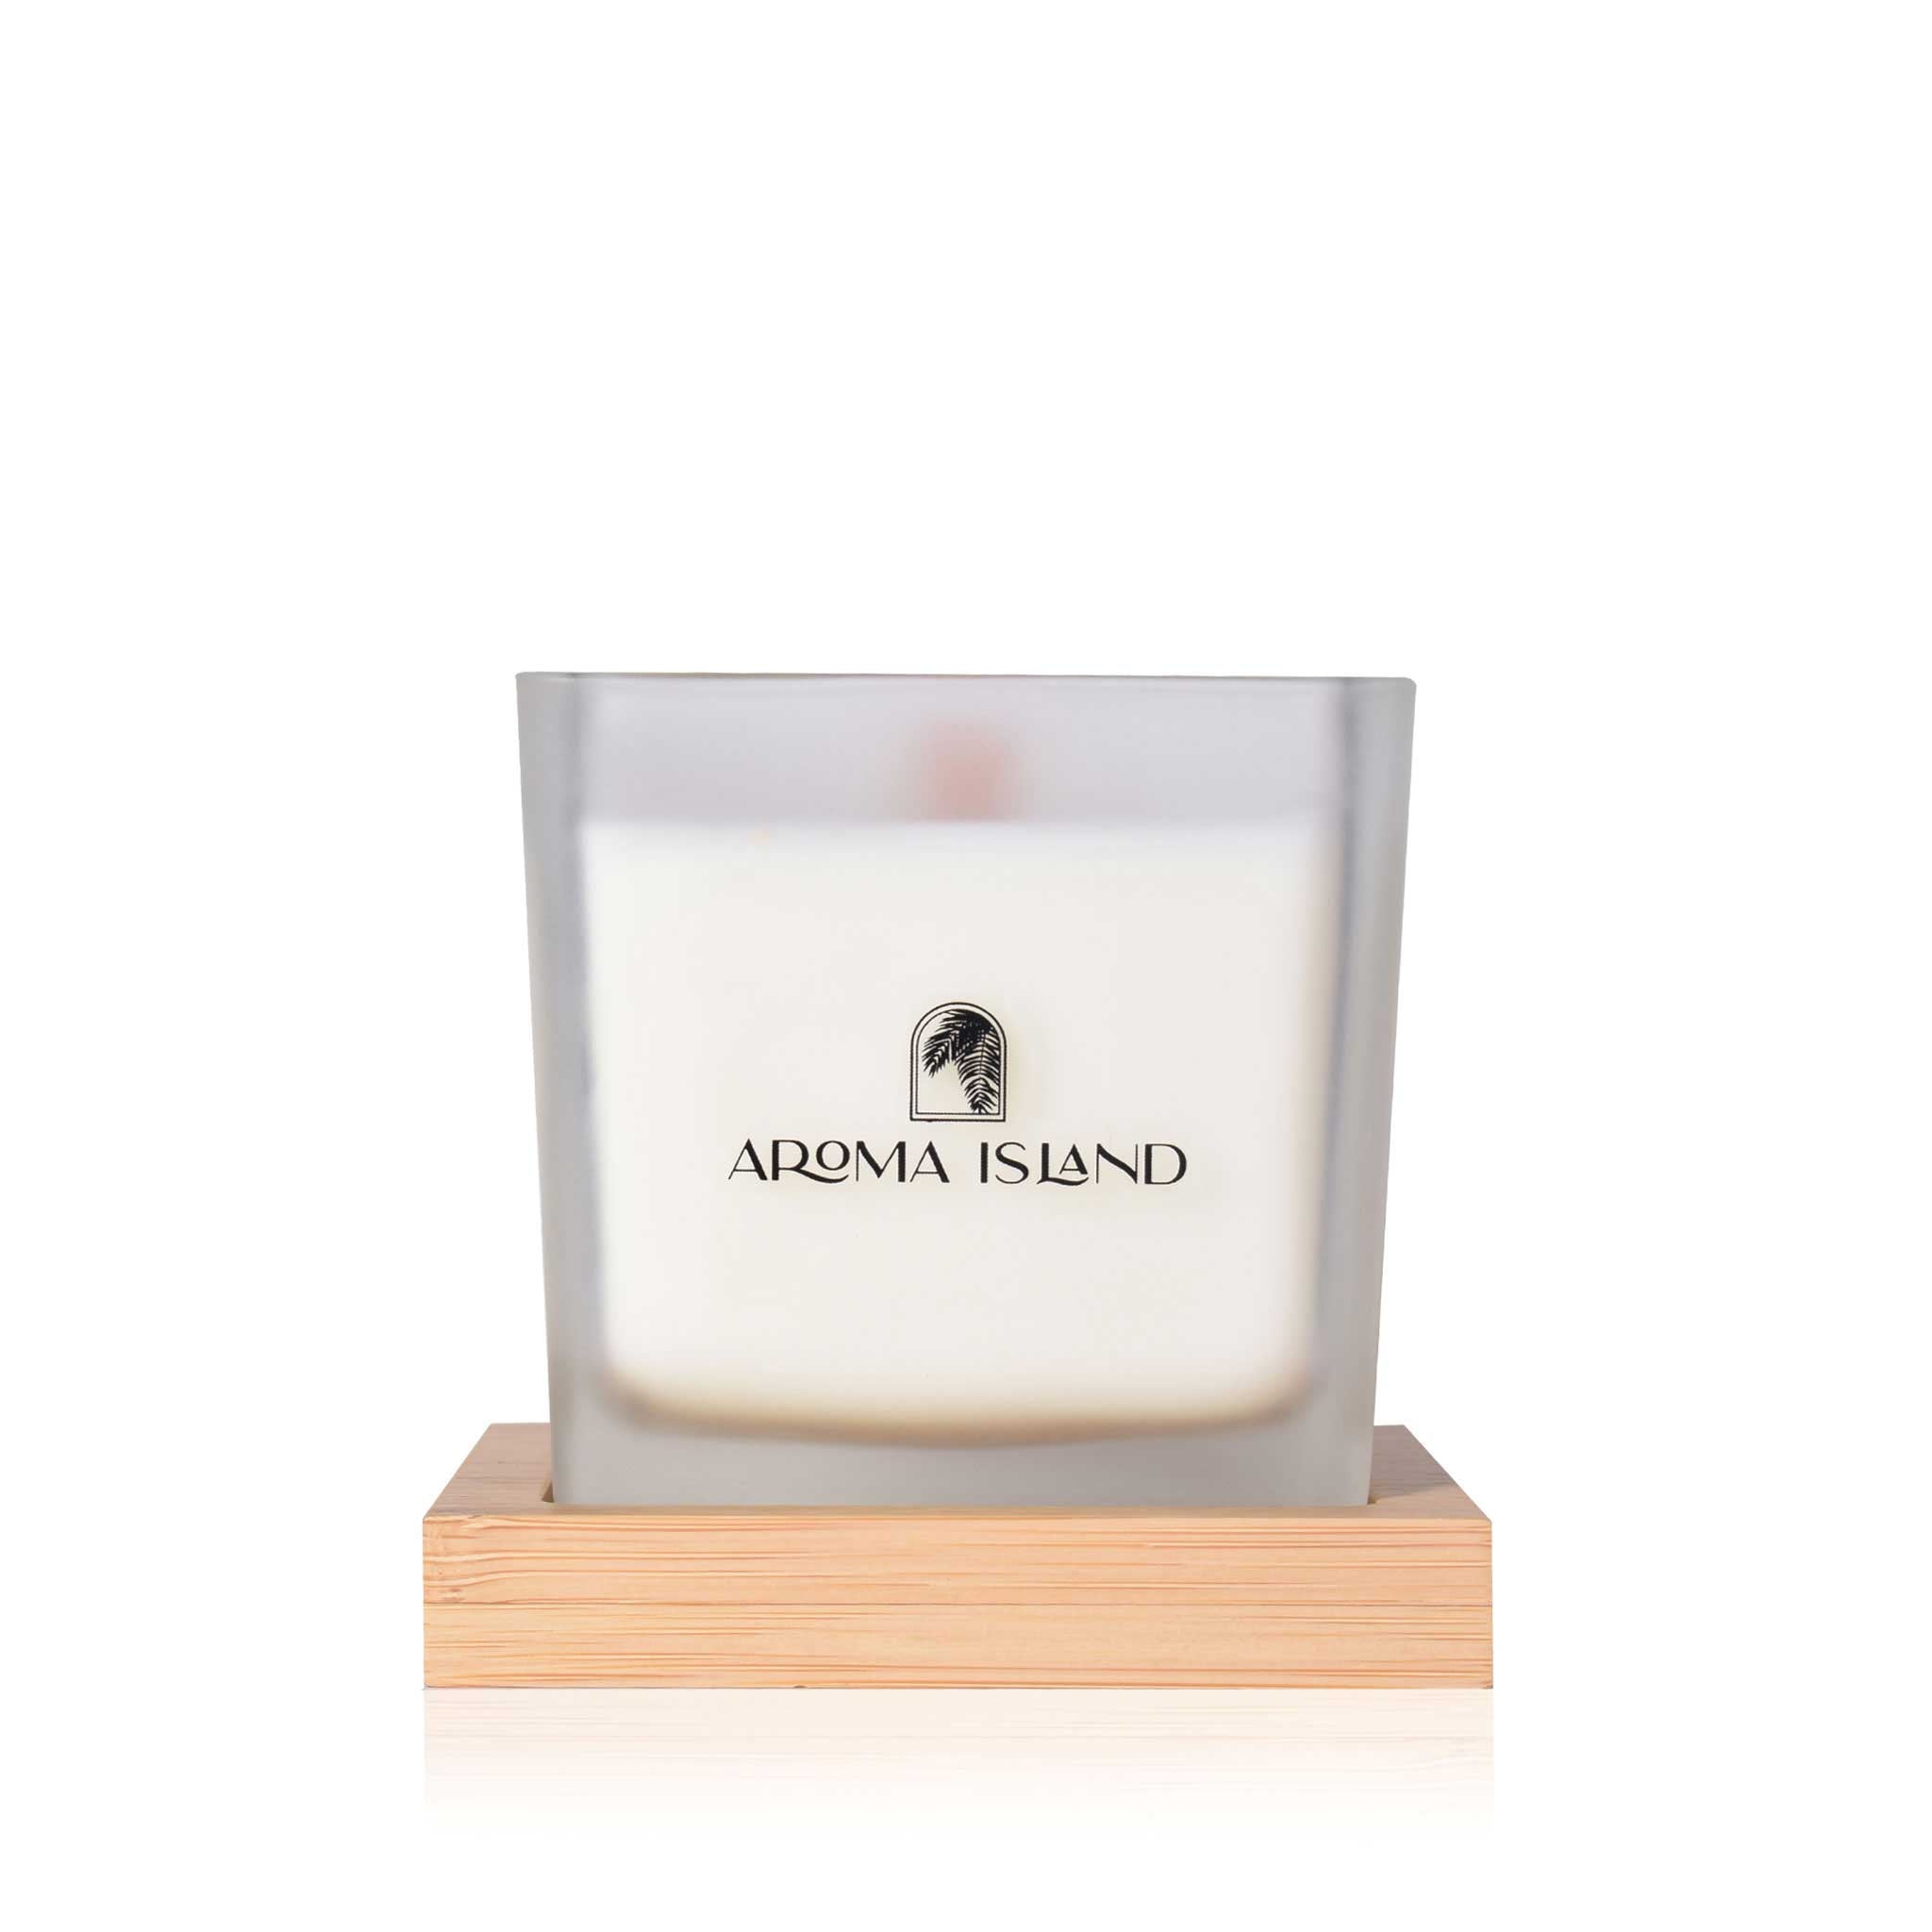 Aroma Island Private Island Gift Box Set